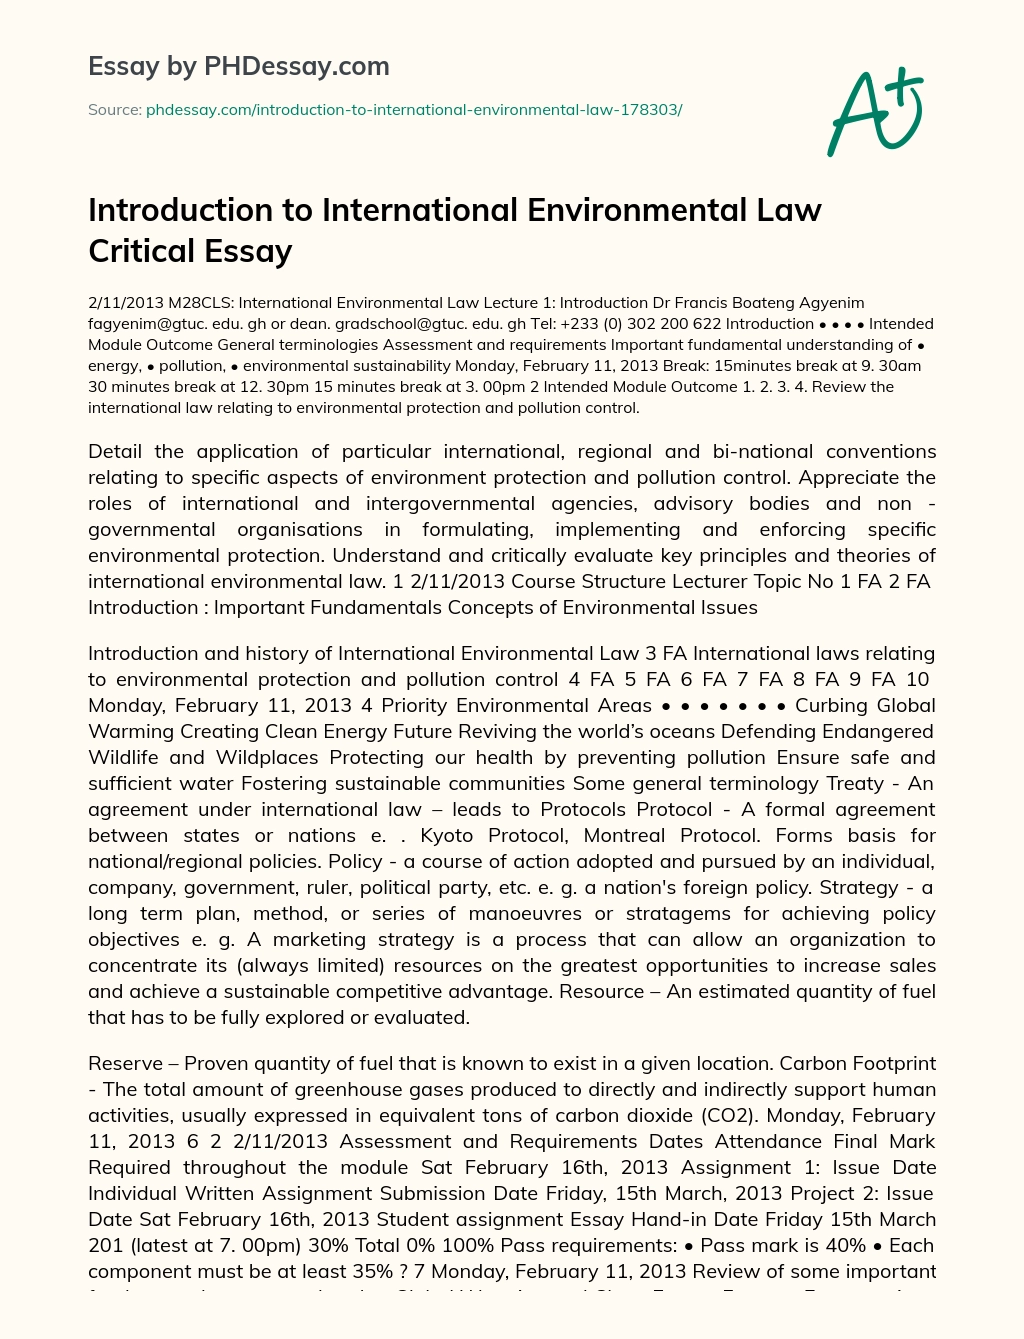 Introduction to International Environmental Law Critical Essay essay